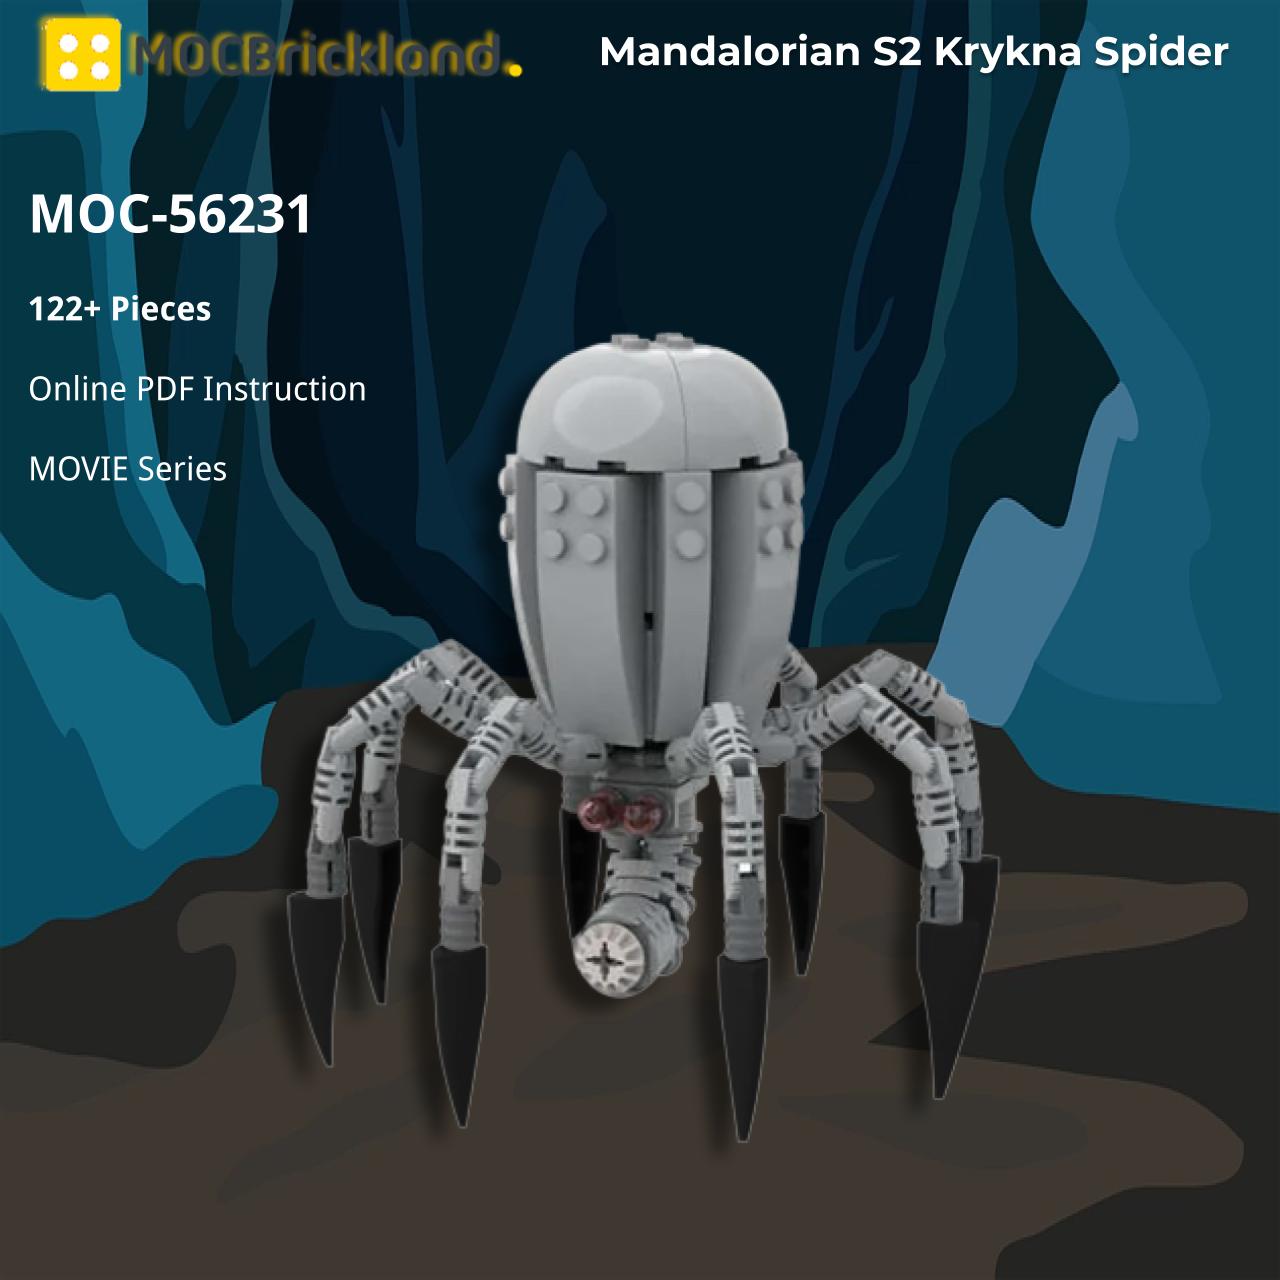 movie moc 56231 mandalorian s2 krykna spider mocbrickland 7916